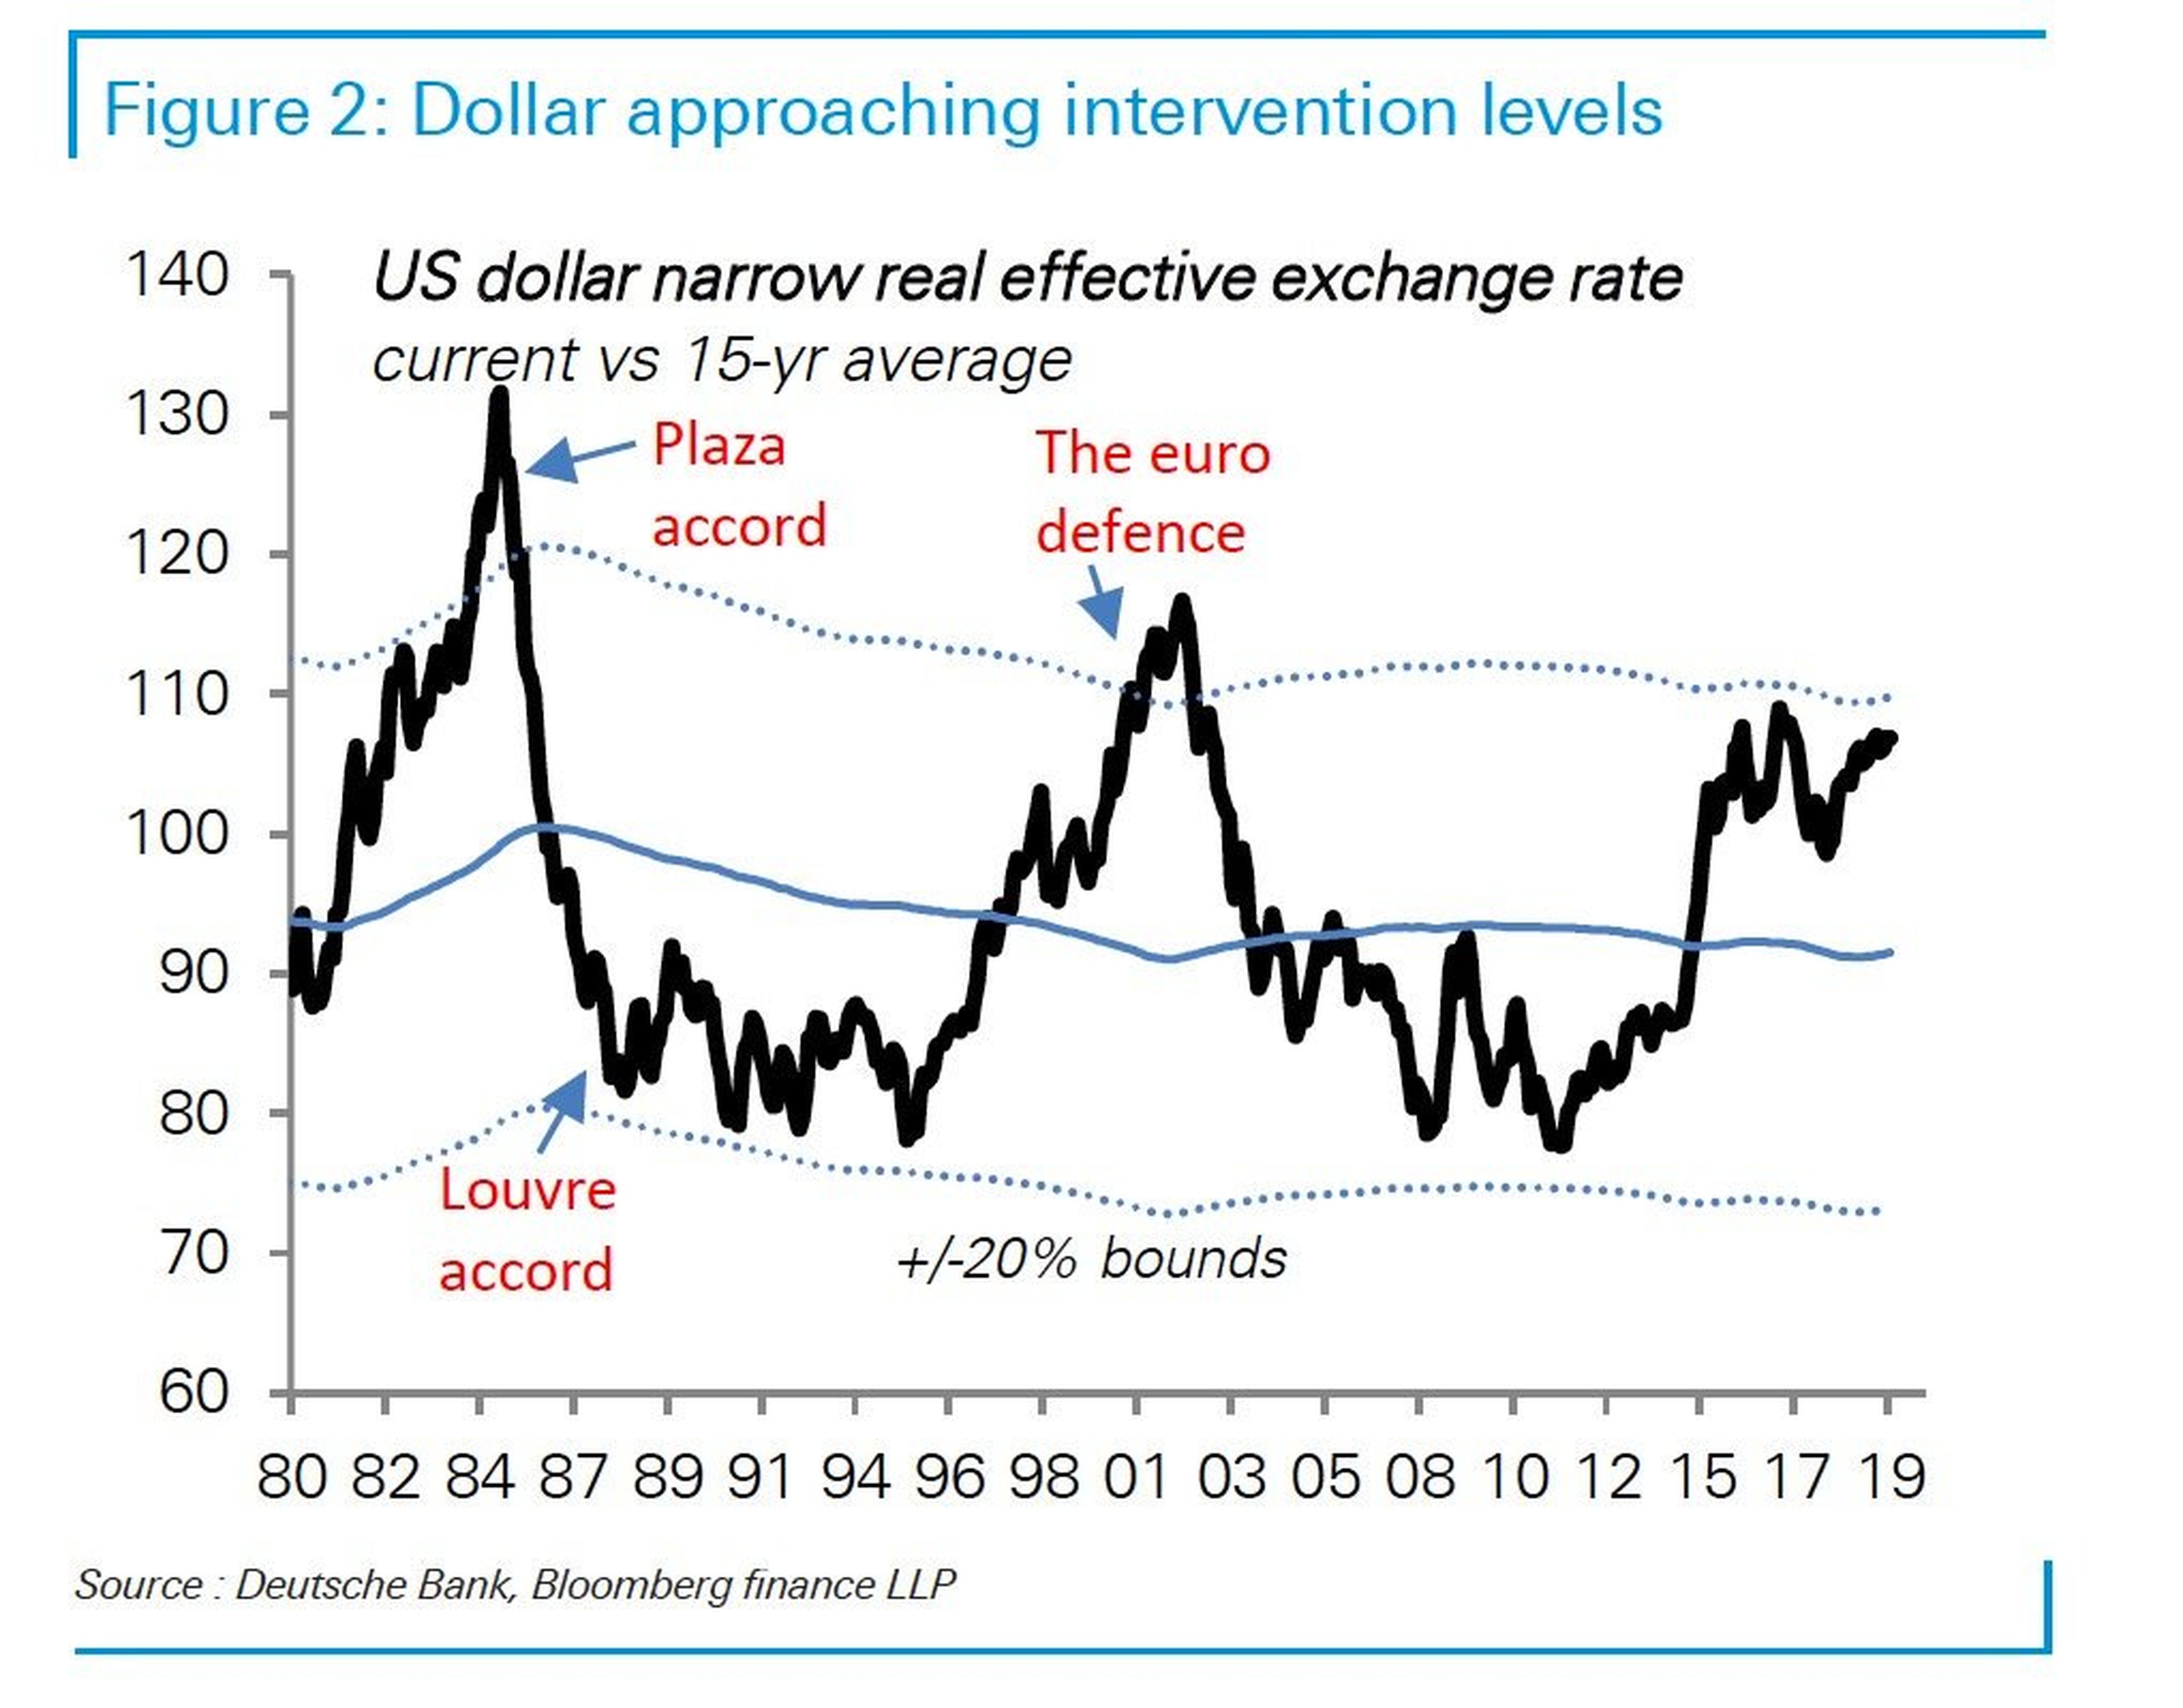 El dólar estadounidense se aproxima a valores de intervención